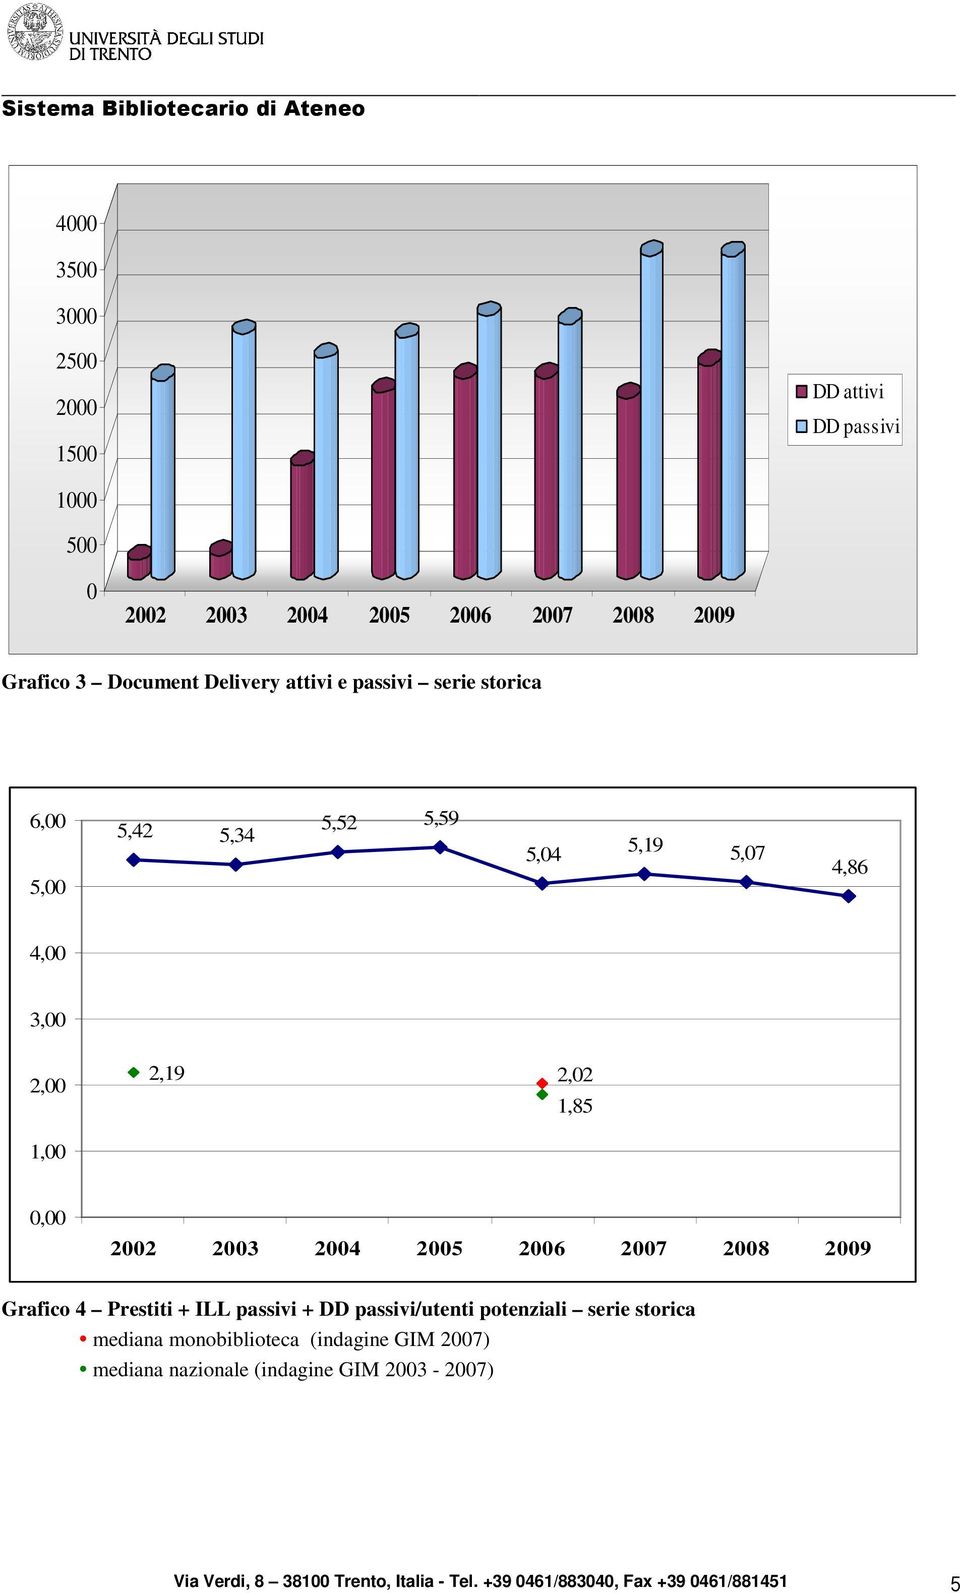 Prestiti + ILL passivi + DD passivi/utenti potenziali serie storica mediana monobiblioteca (indagine GIM 2007)